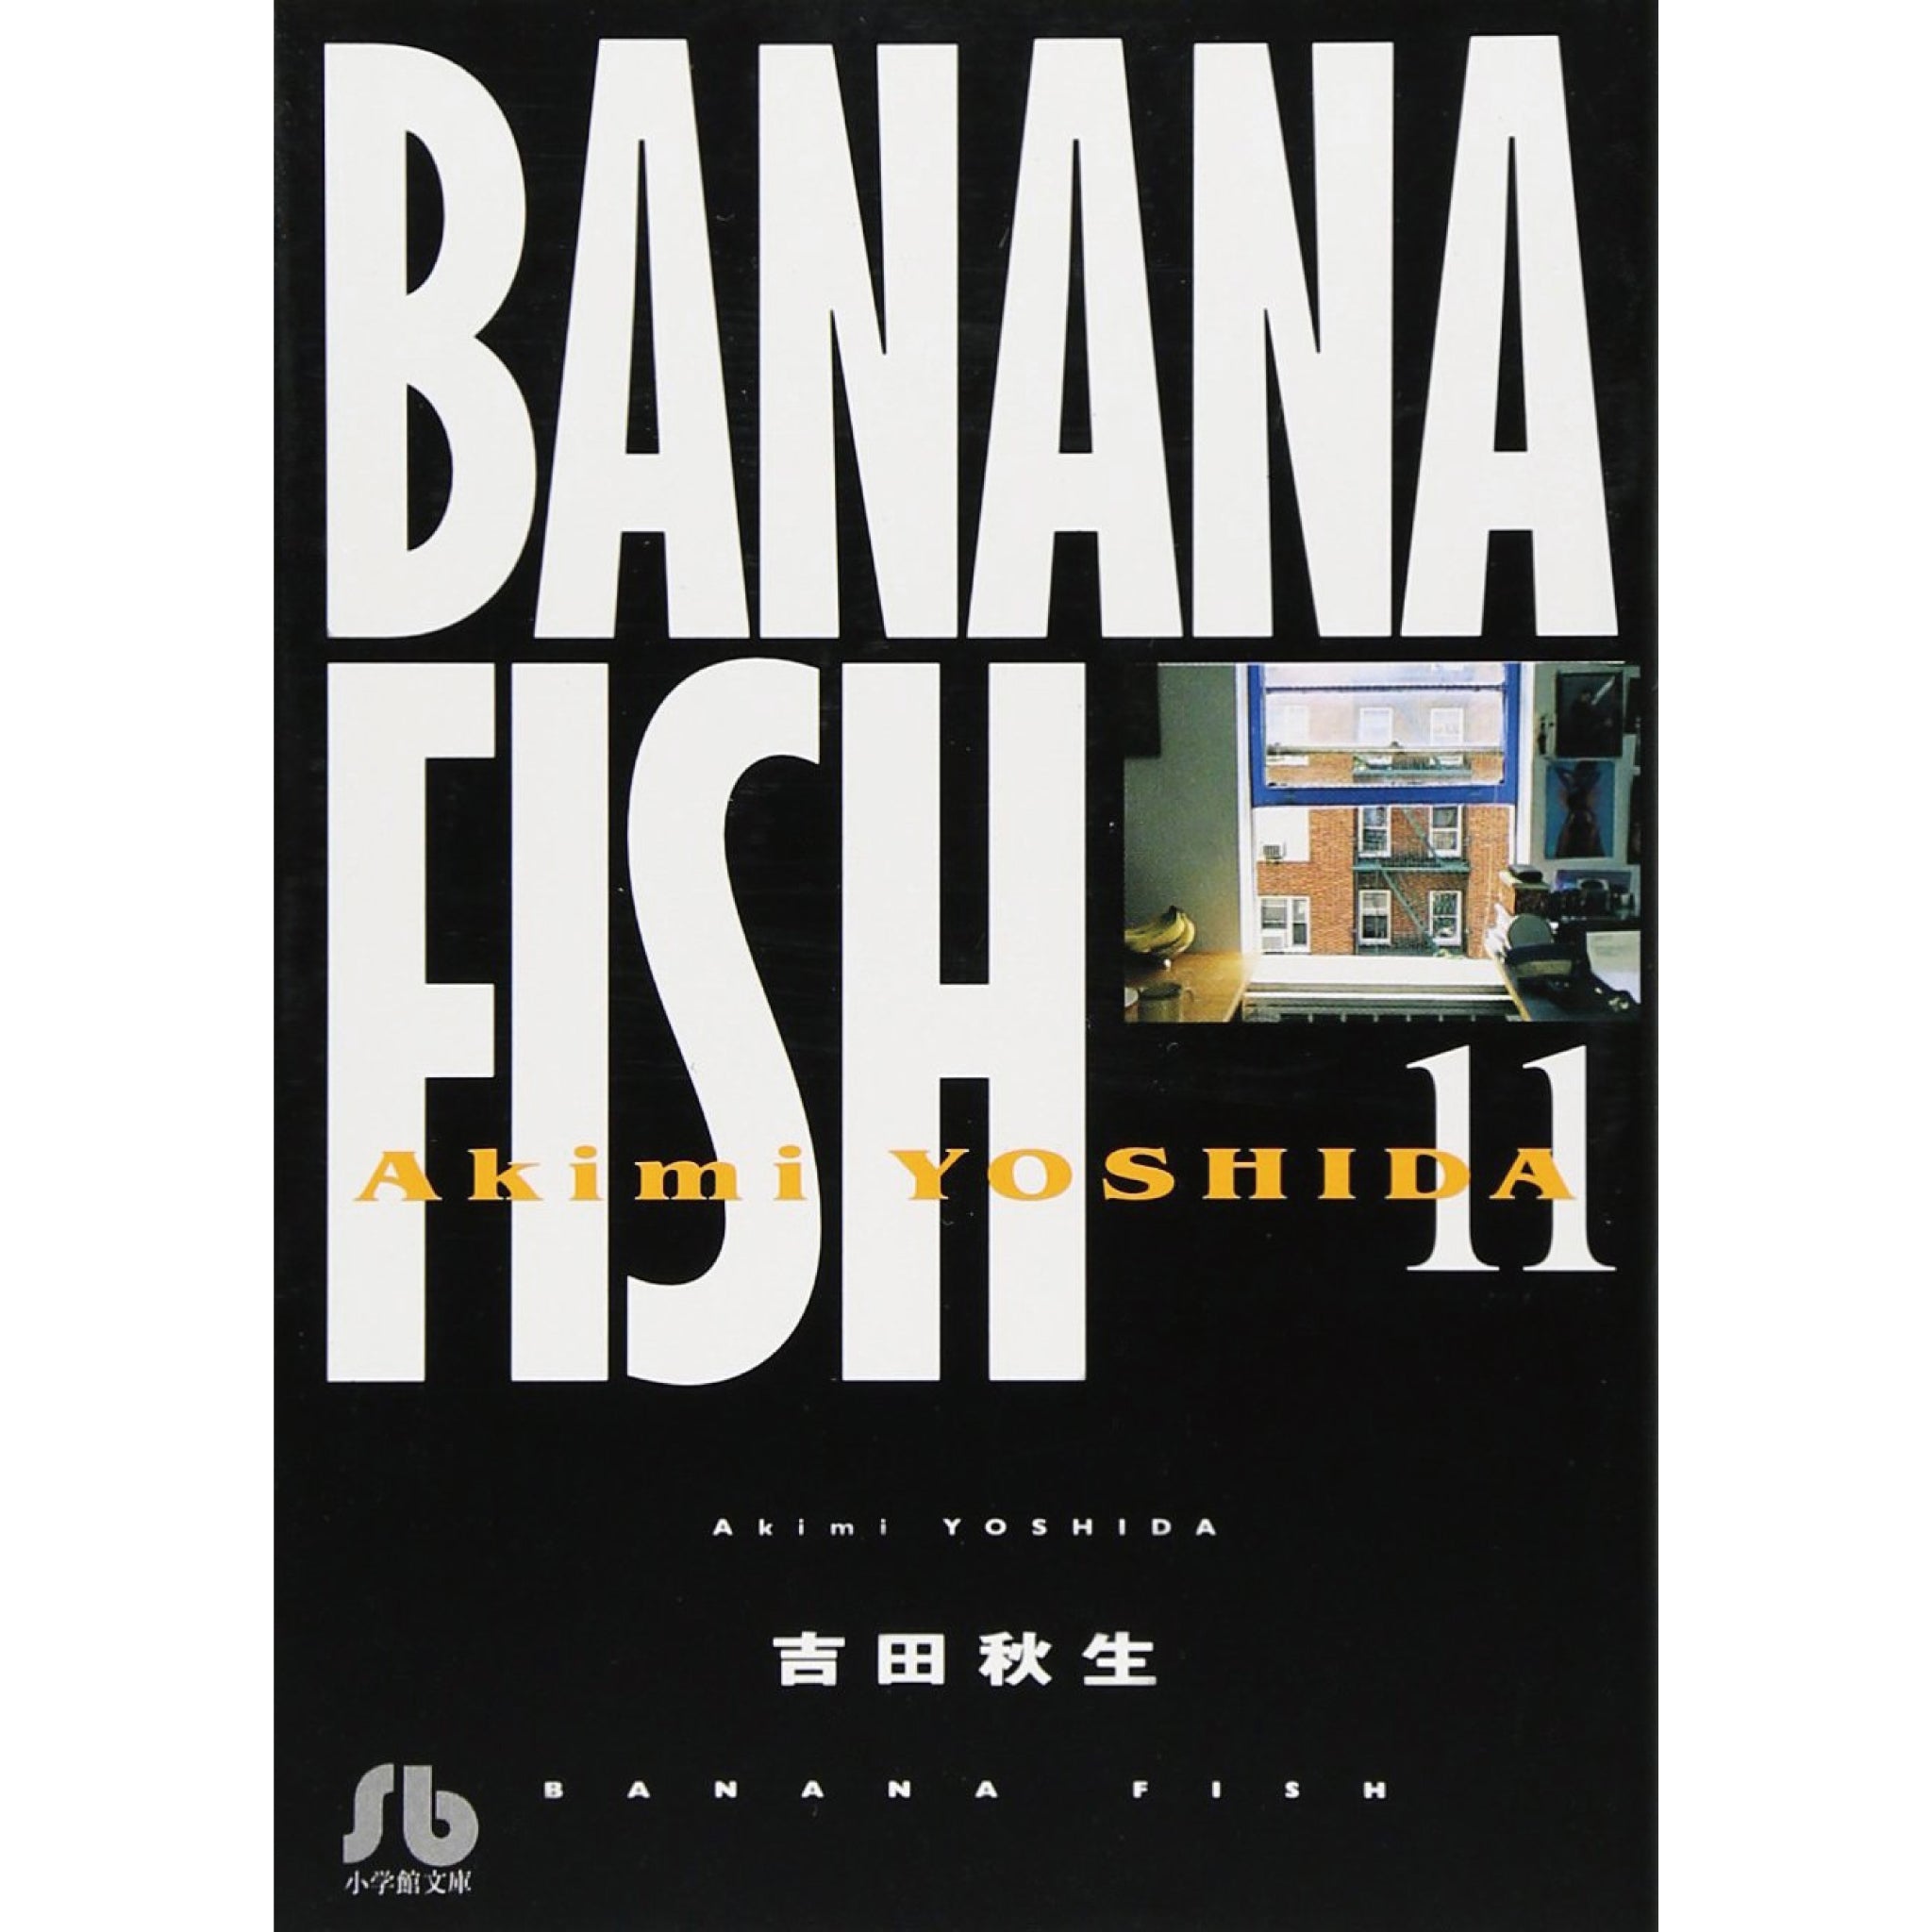 BANANA FISH 文庫版 全巻セット（全12巻）